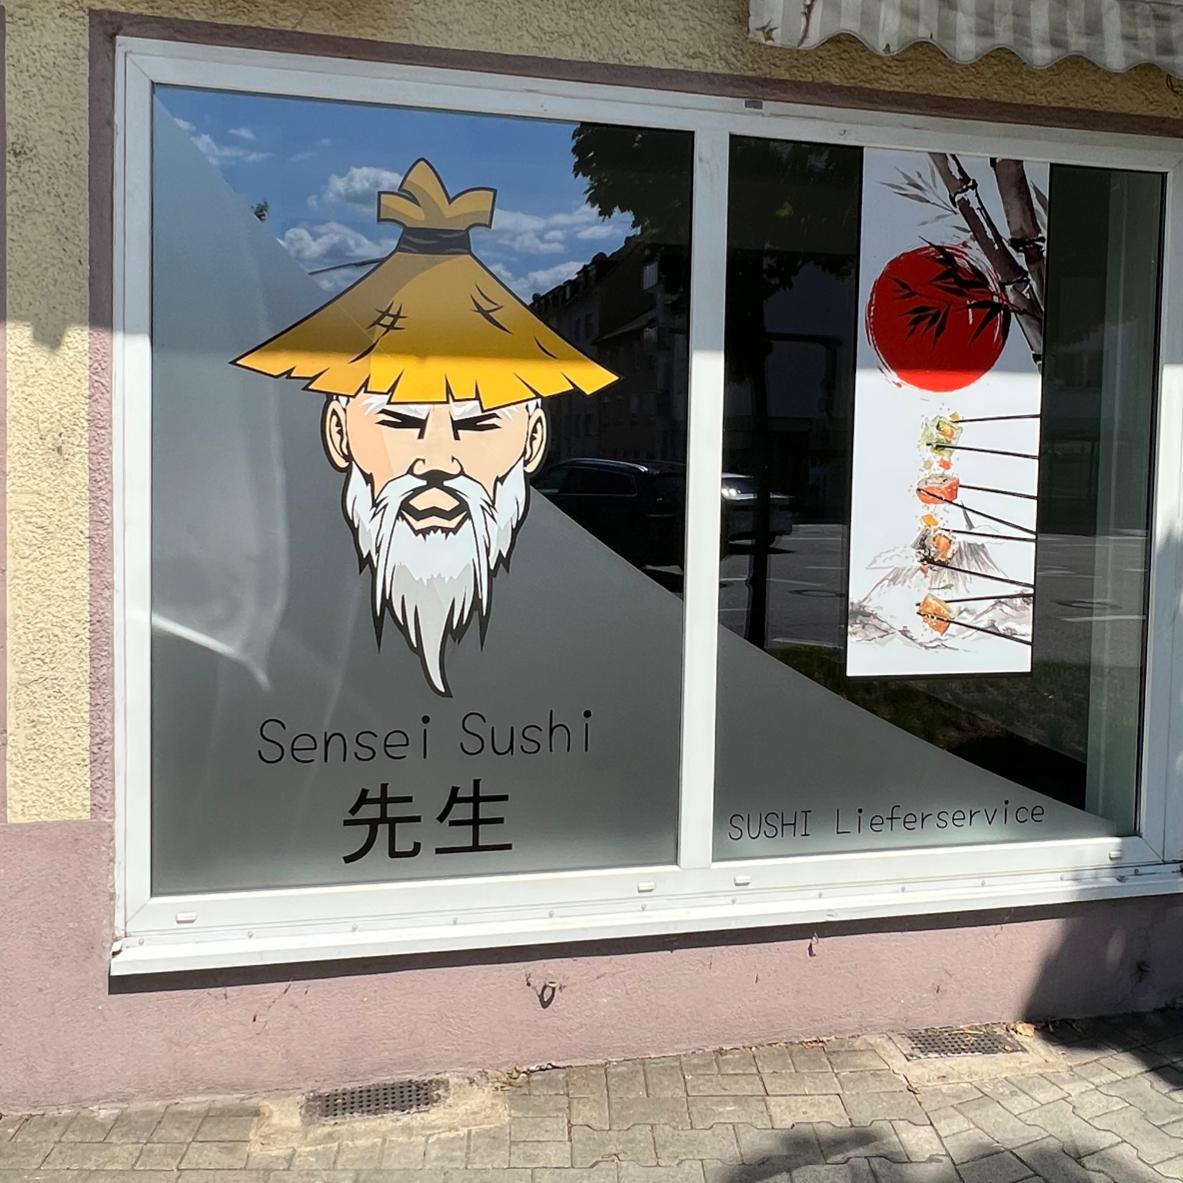 Restaurant "Sensei Sushi" in Pforzheim